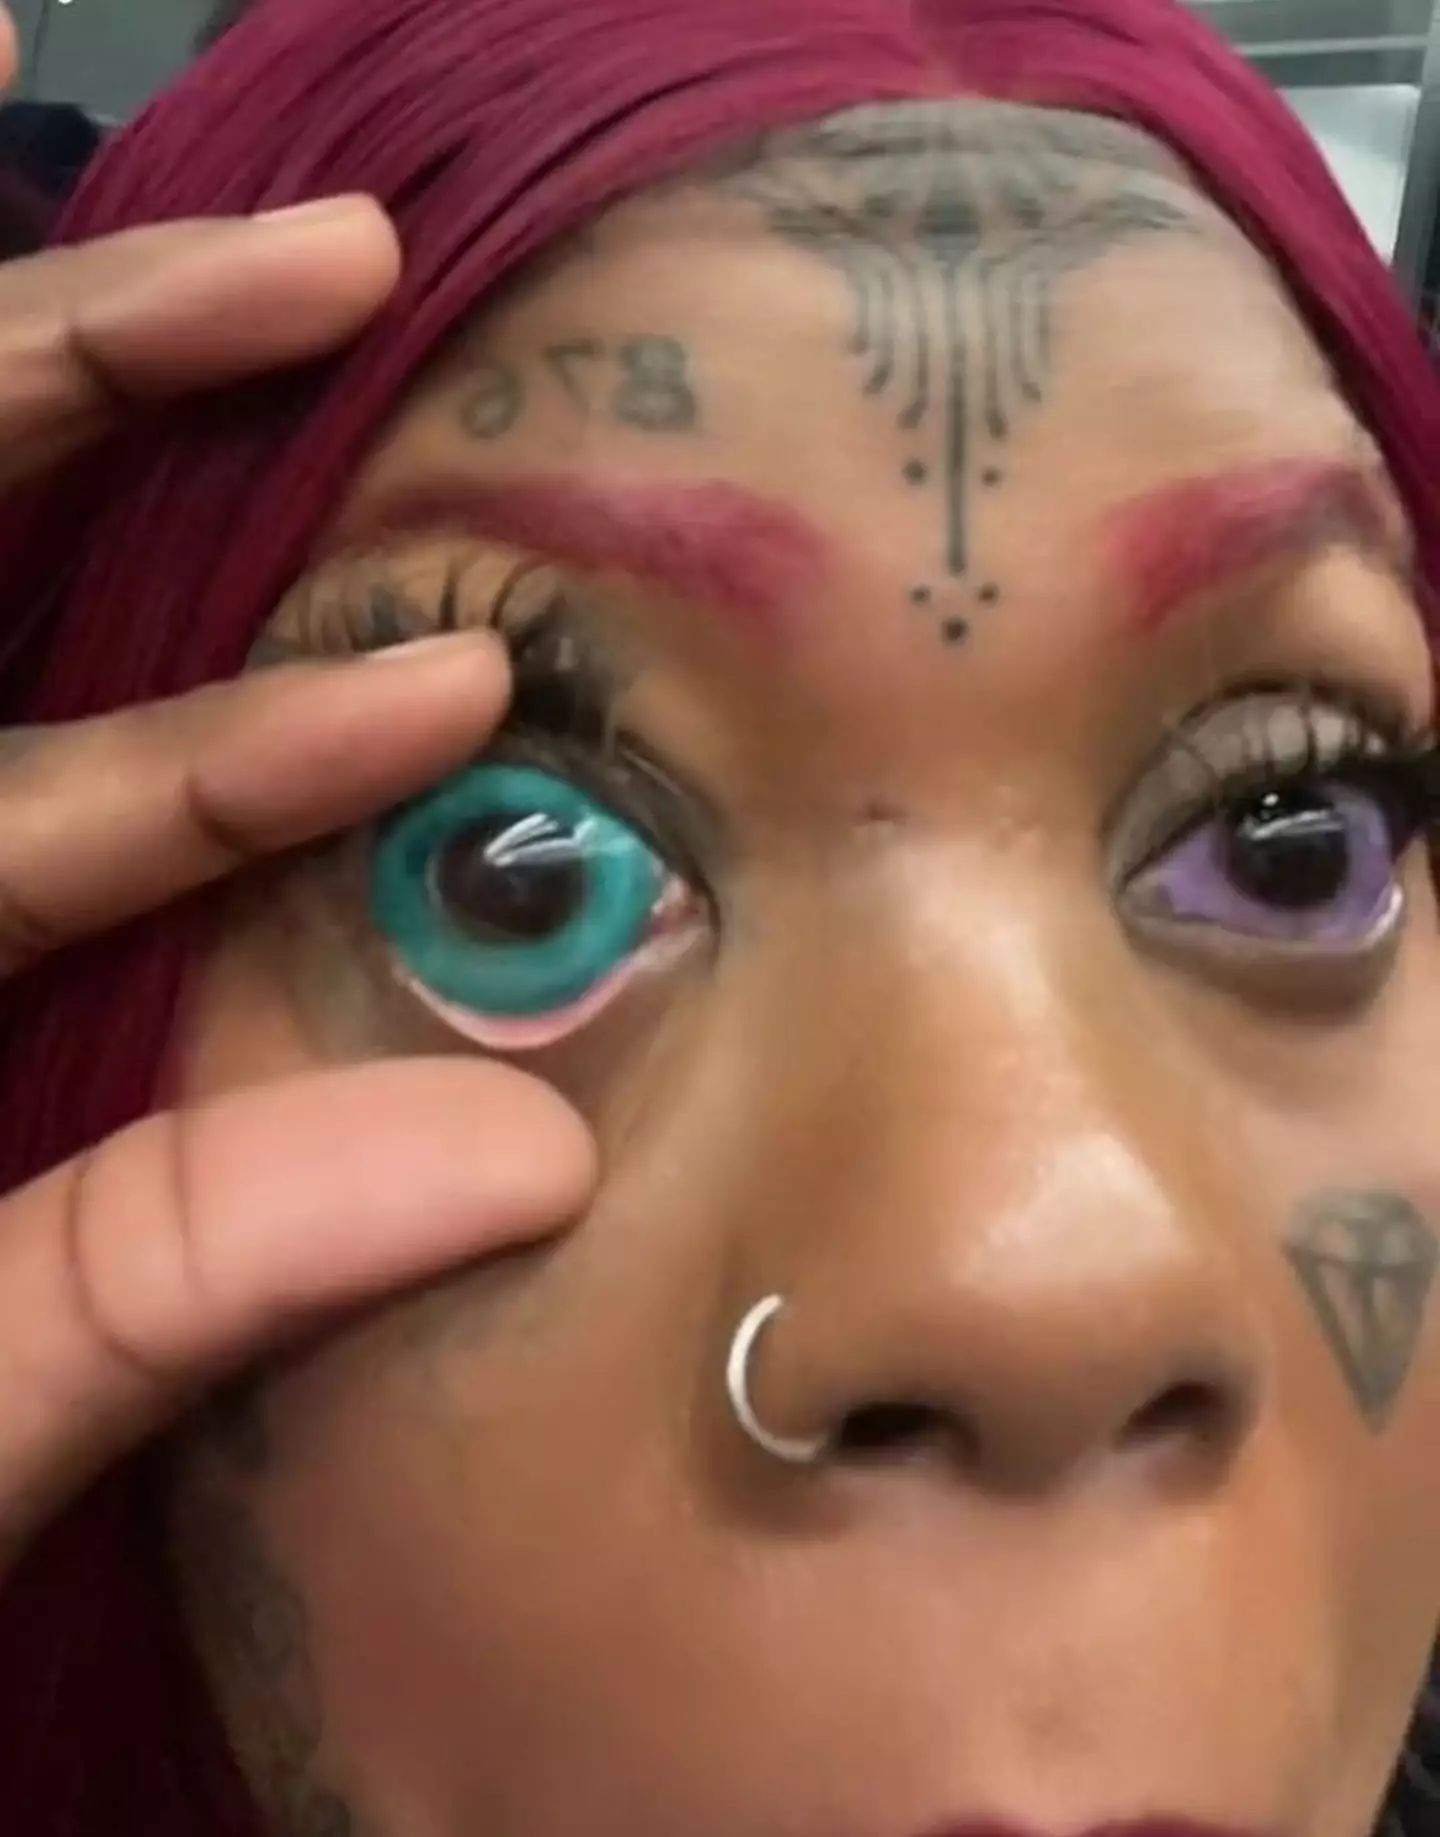 The mum got her eyes tattooed in 2020.